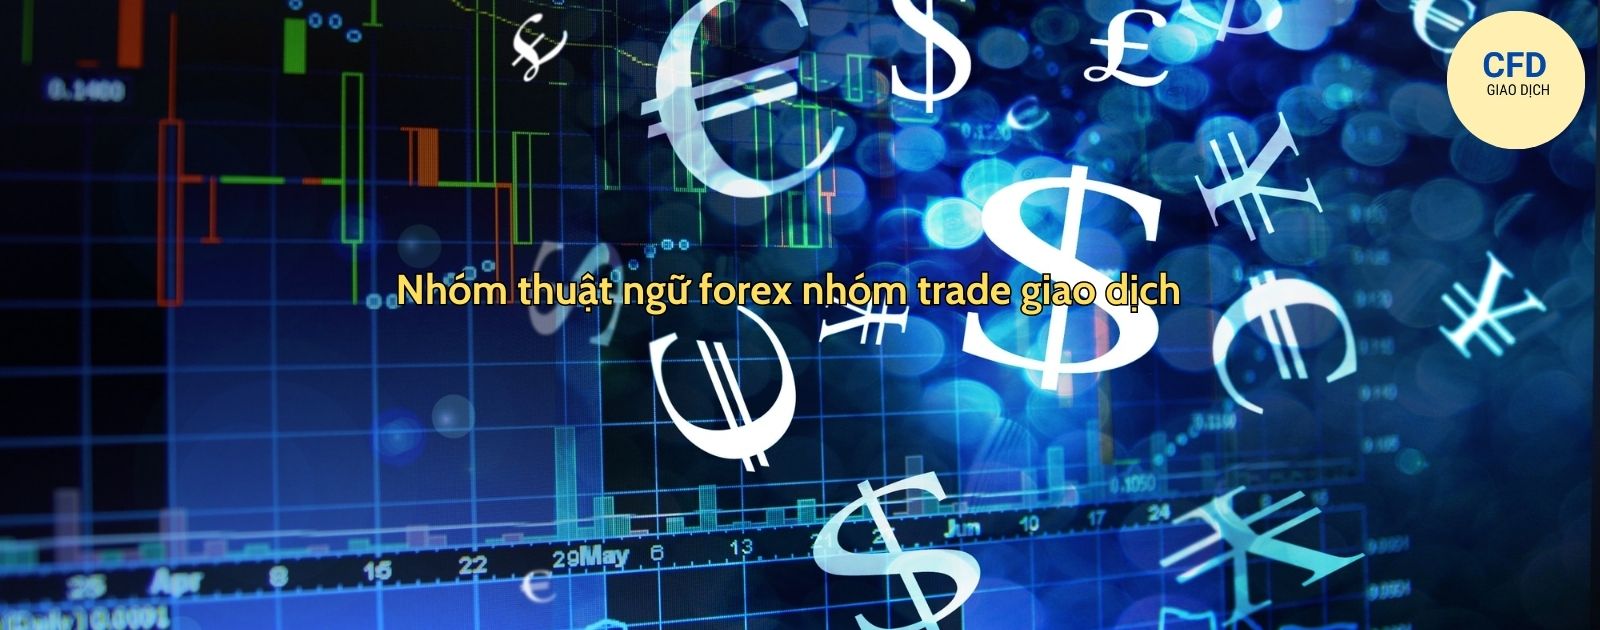 nhóm thuật ngữ forex trade giao dịch